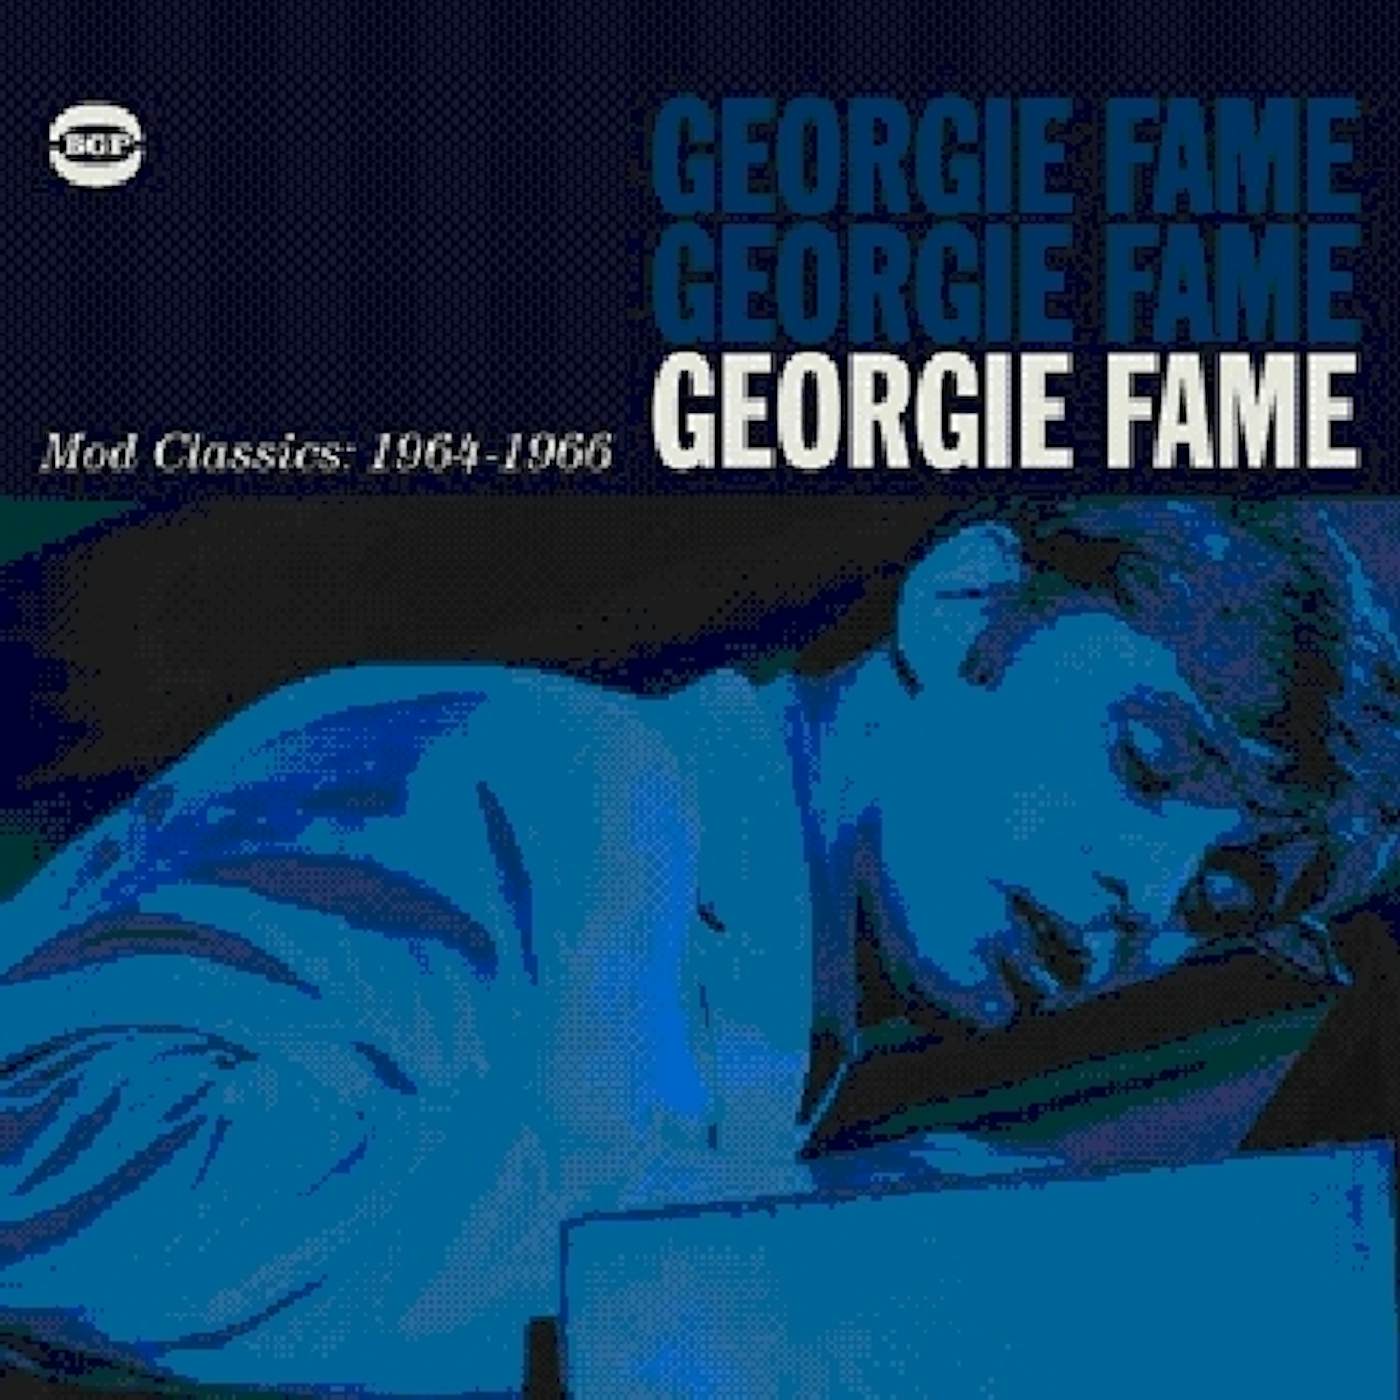 Georgie Fame MOD CLASSICS: 1964-1966 CD